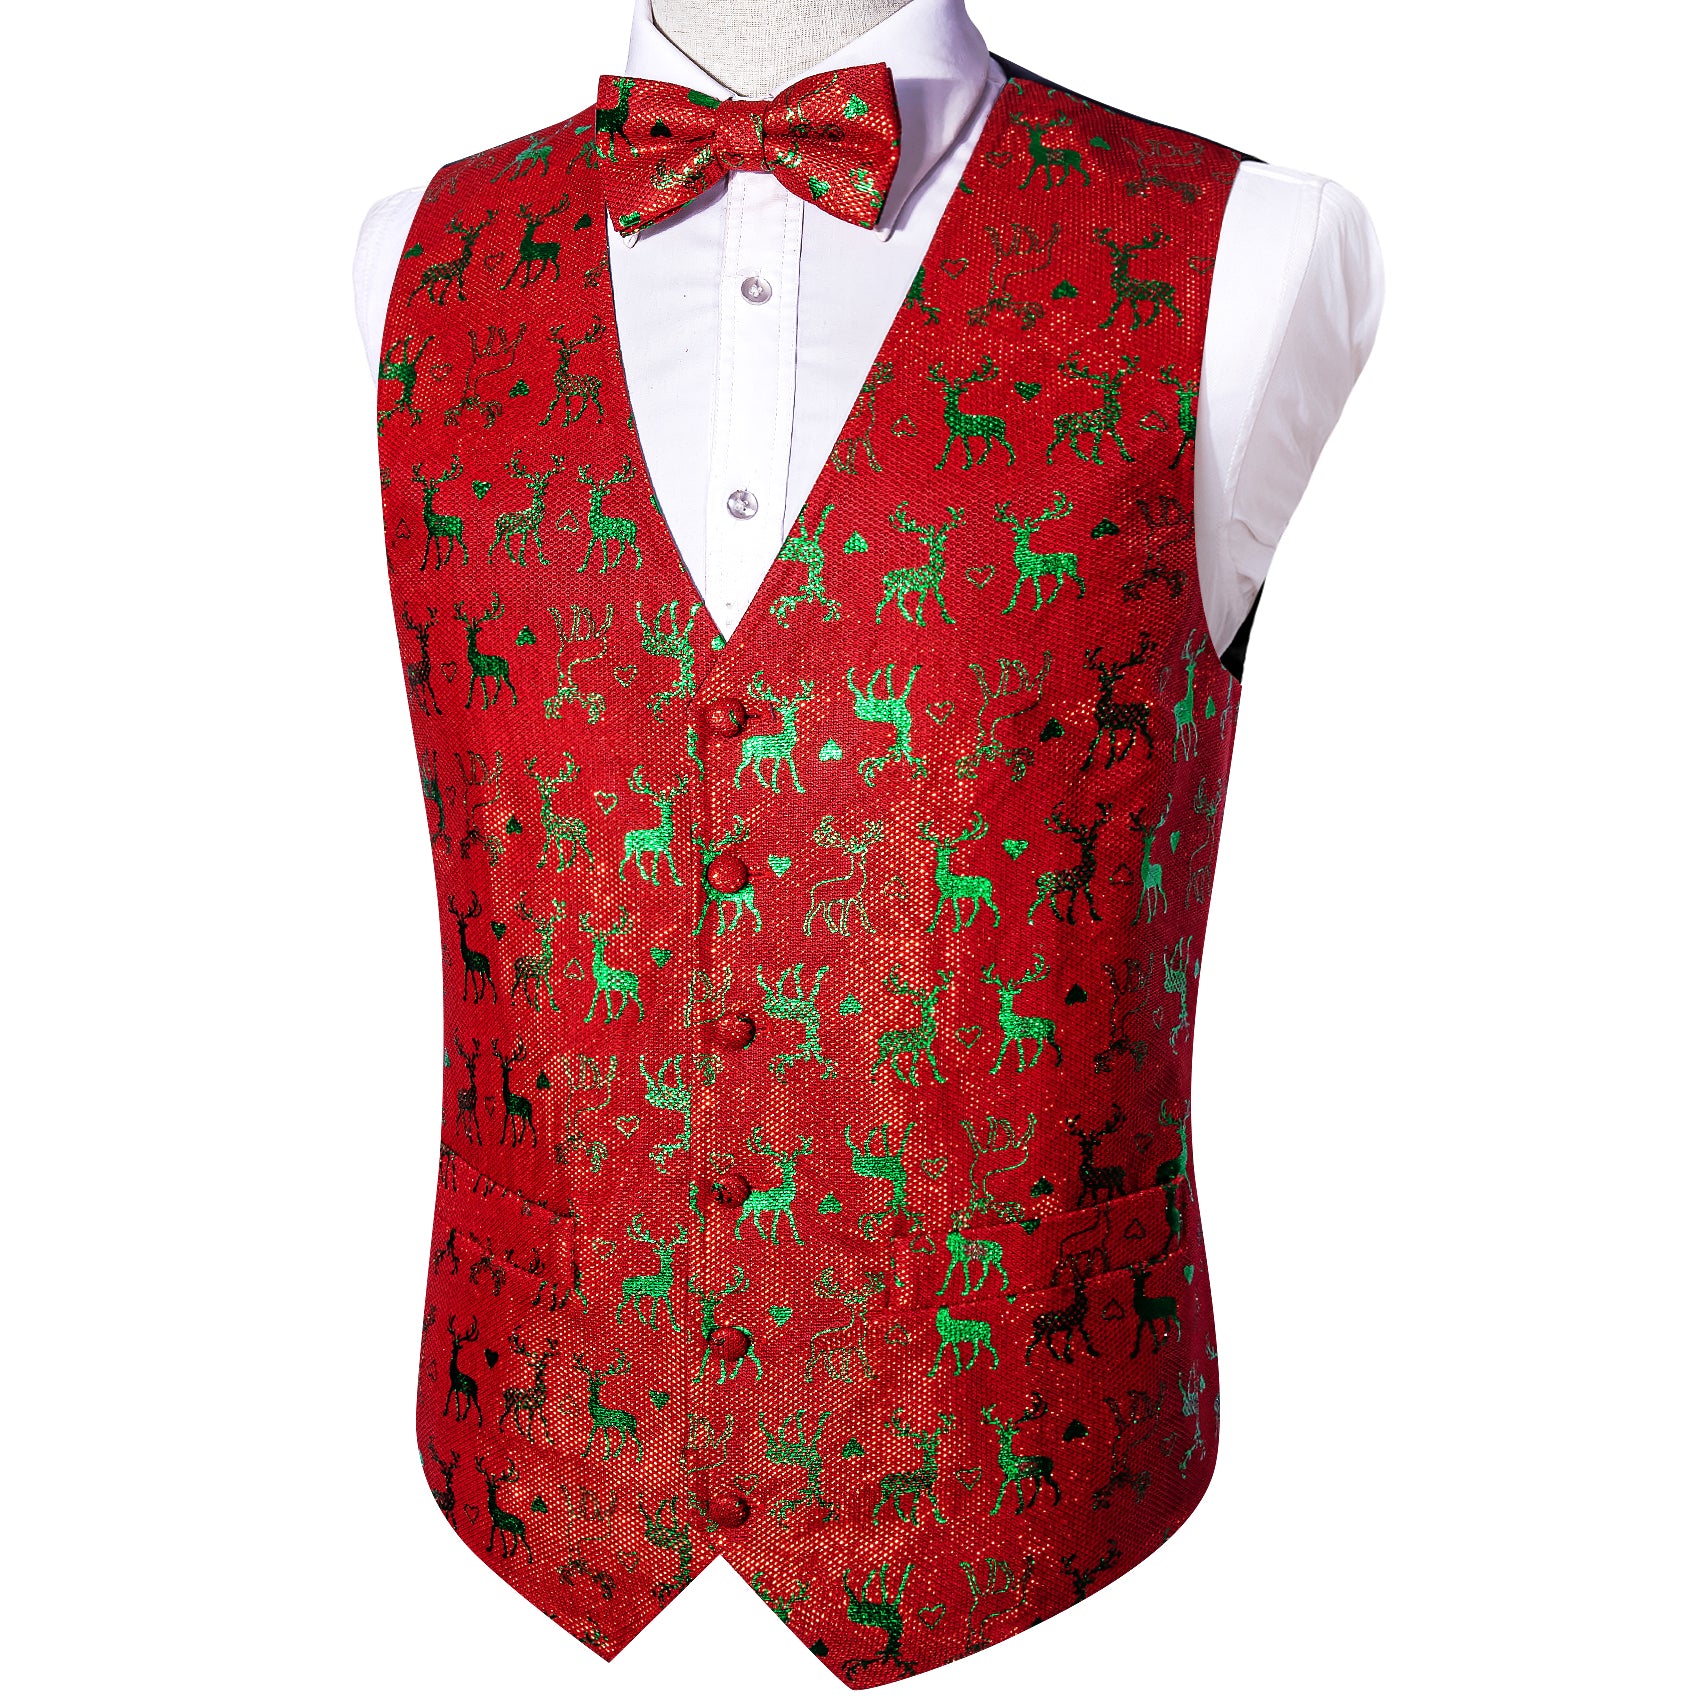 Barry.wang Men's Vest Xmas Red Green Elk Silk Bowtie V-Neck Vest Set